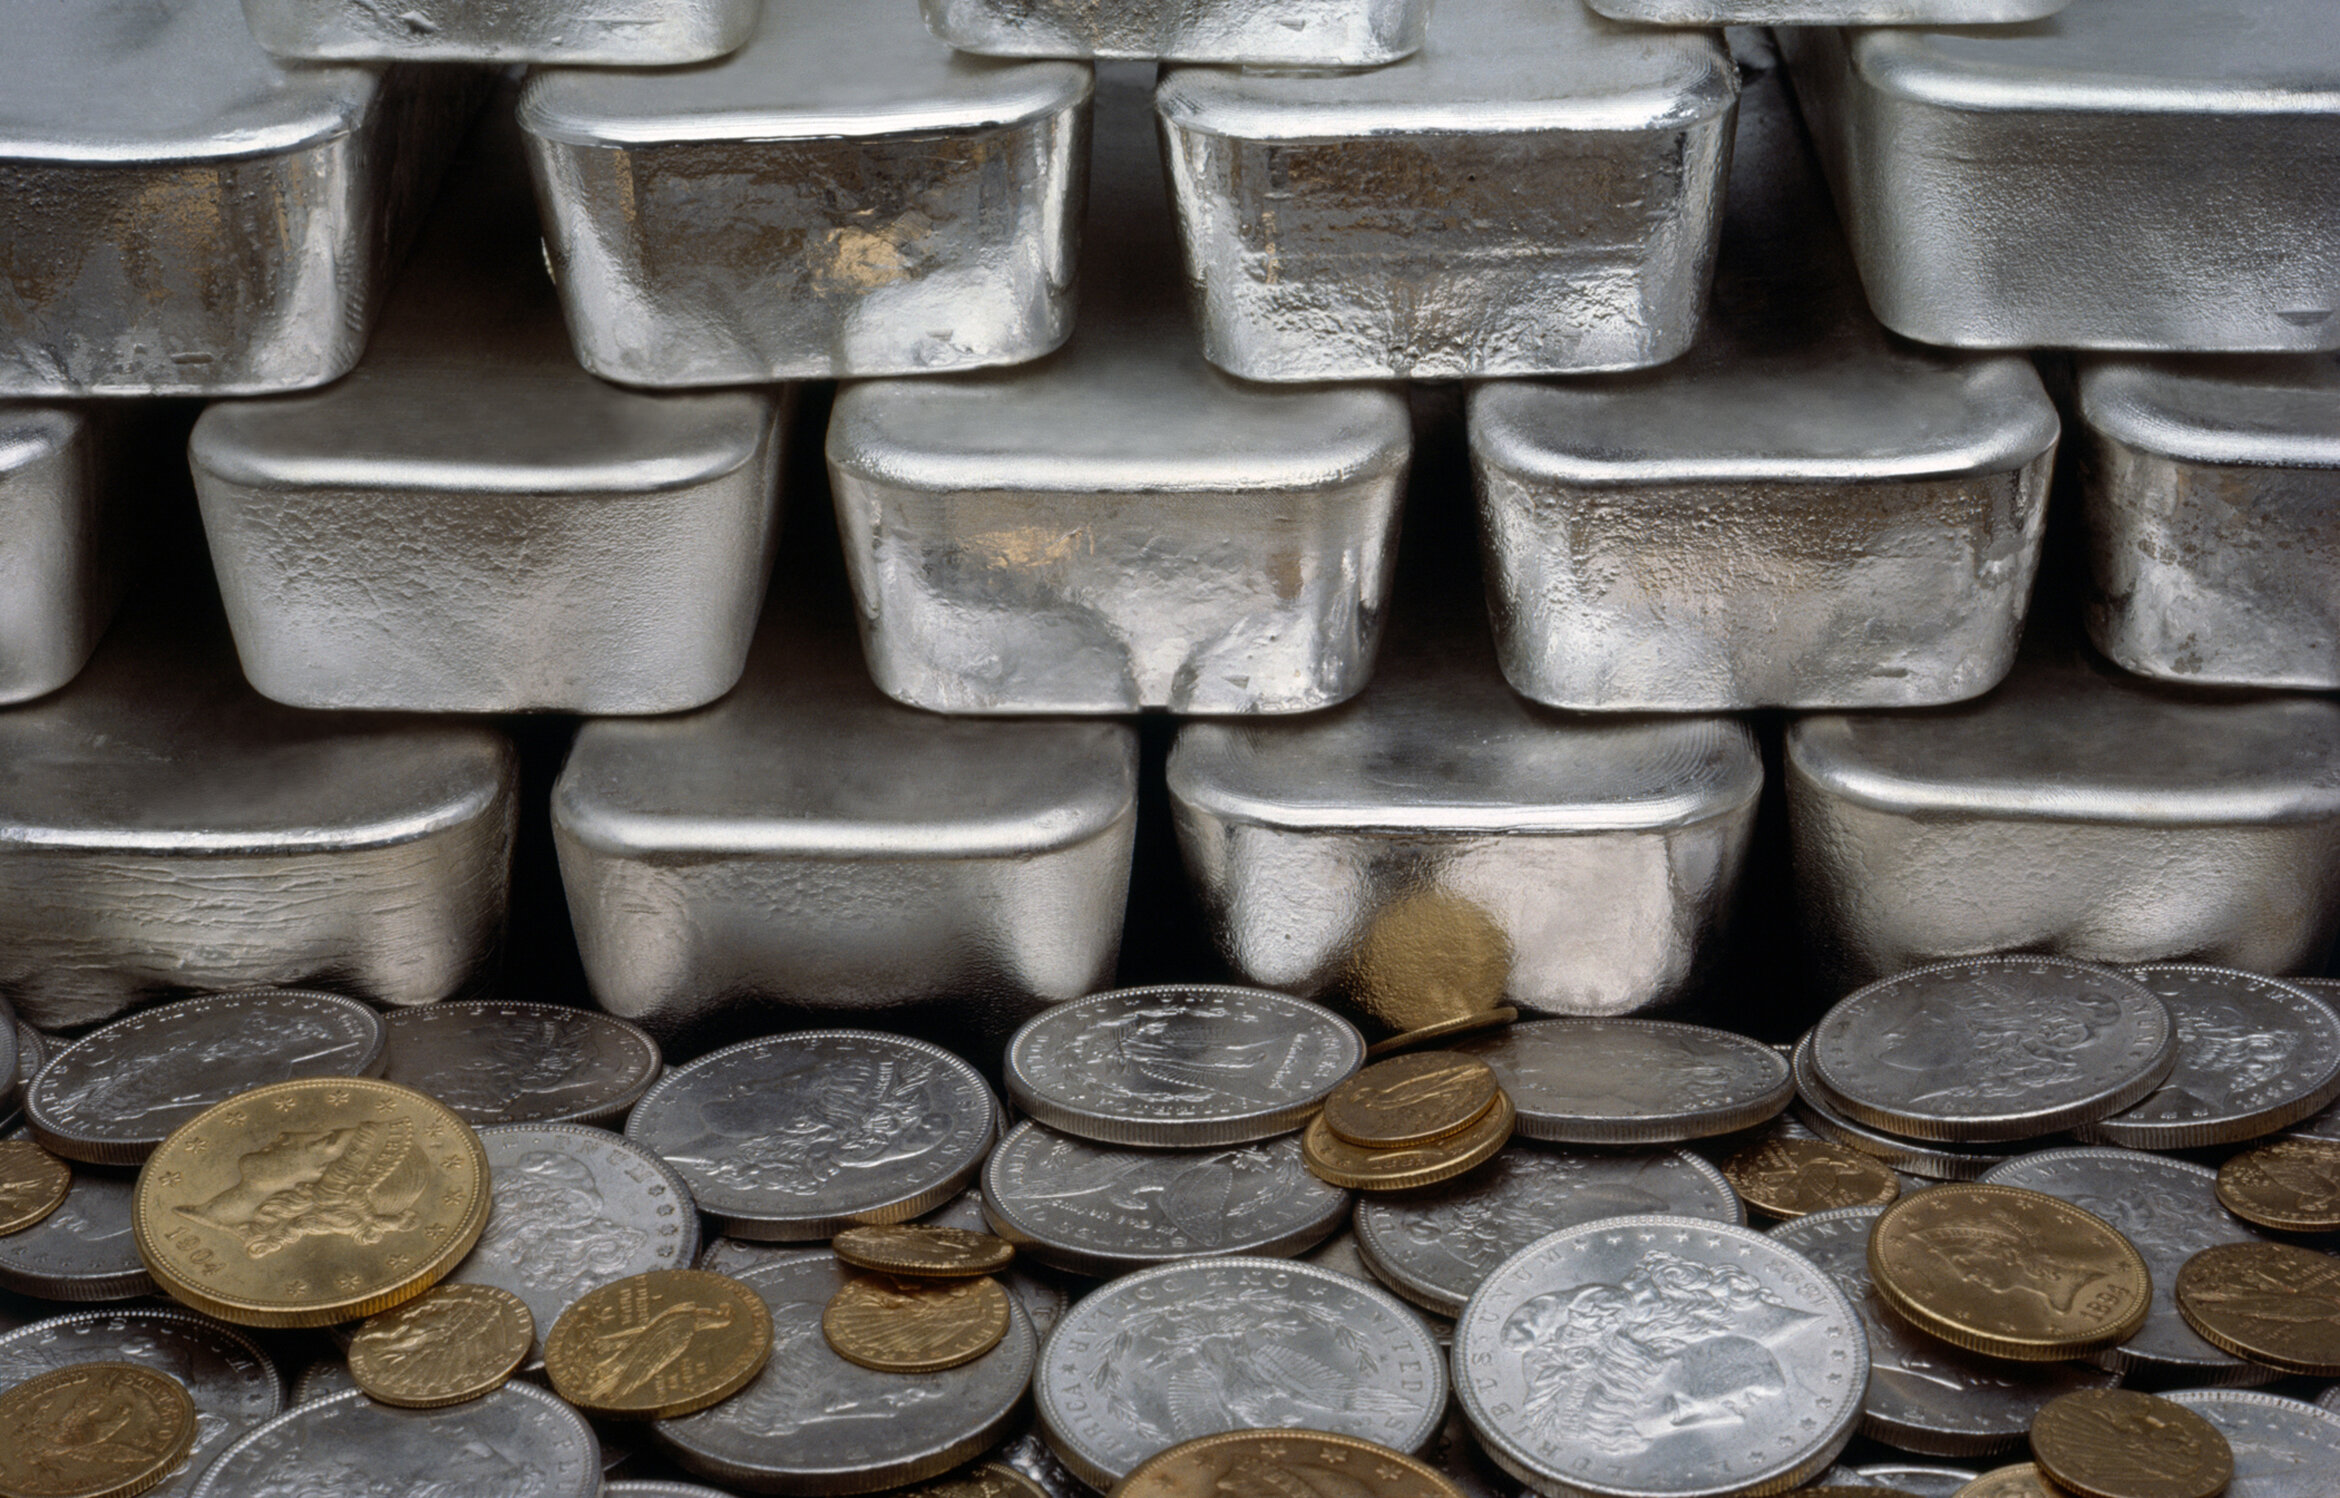 Silver bars, silver:gold coins.jpg